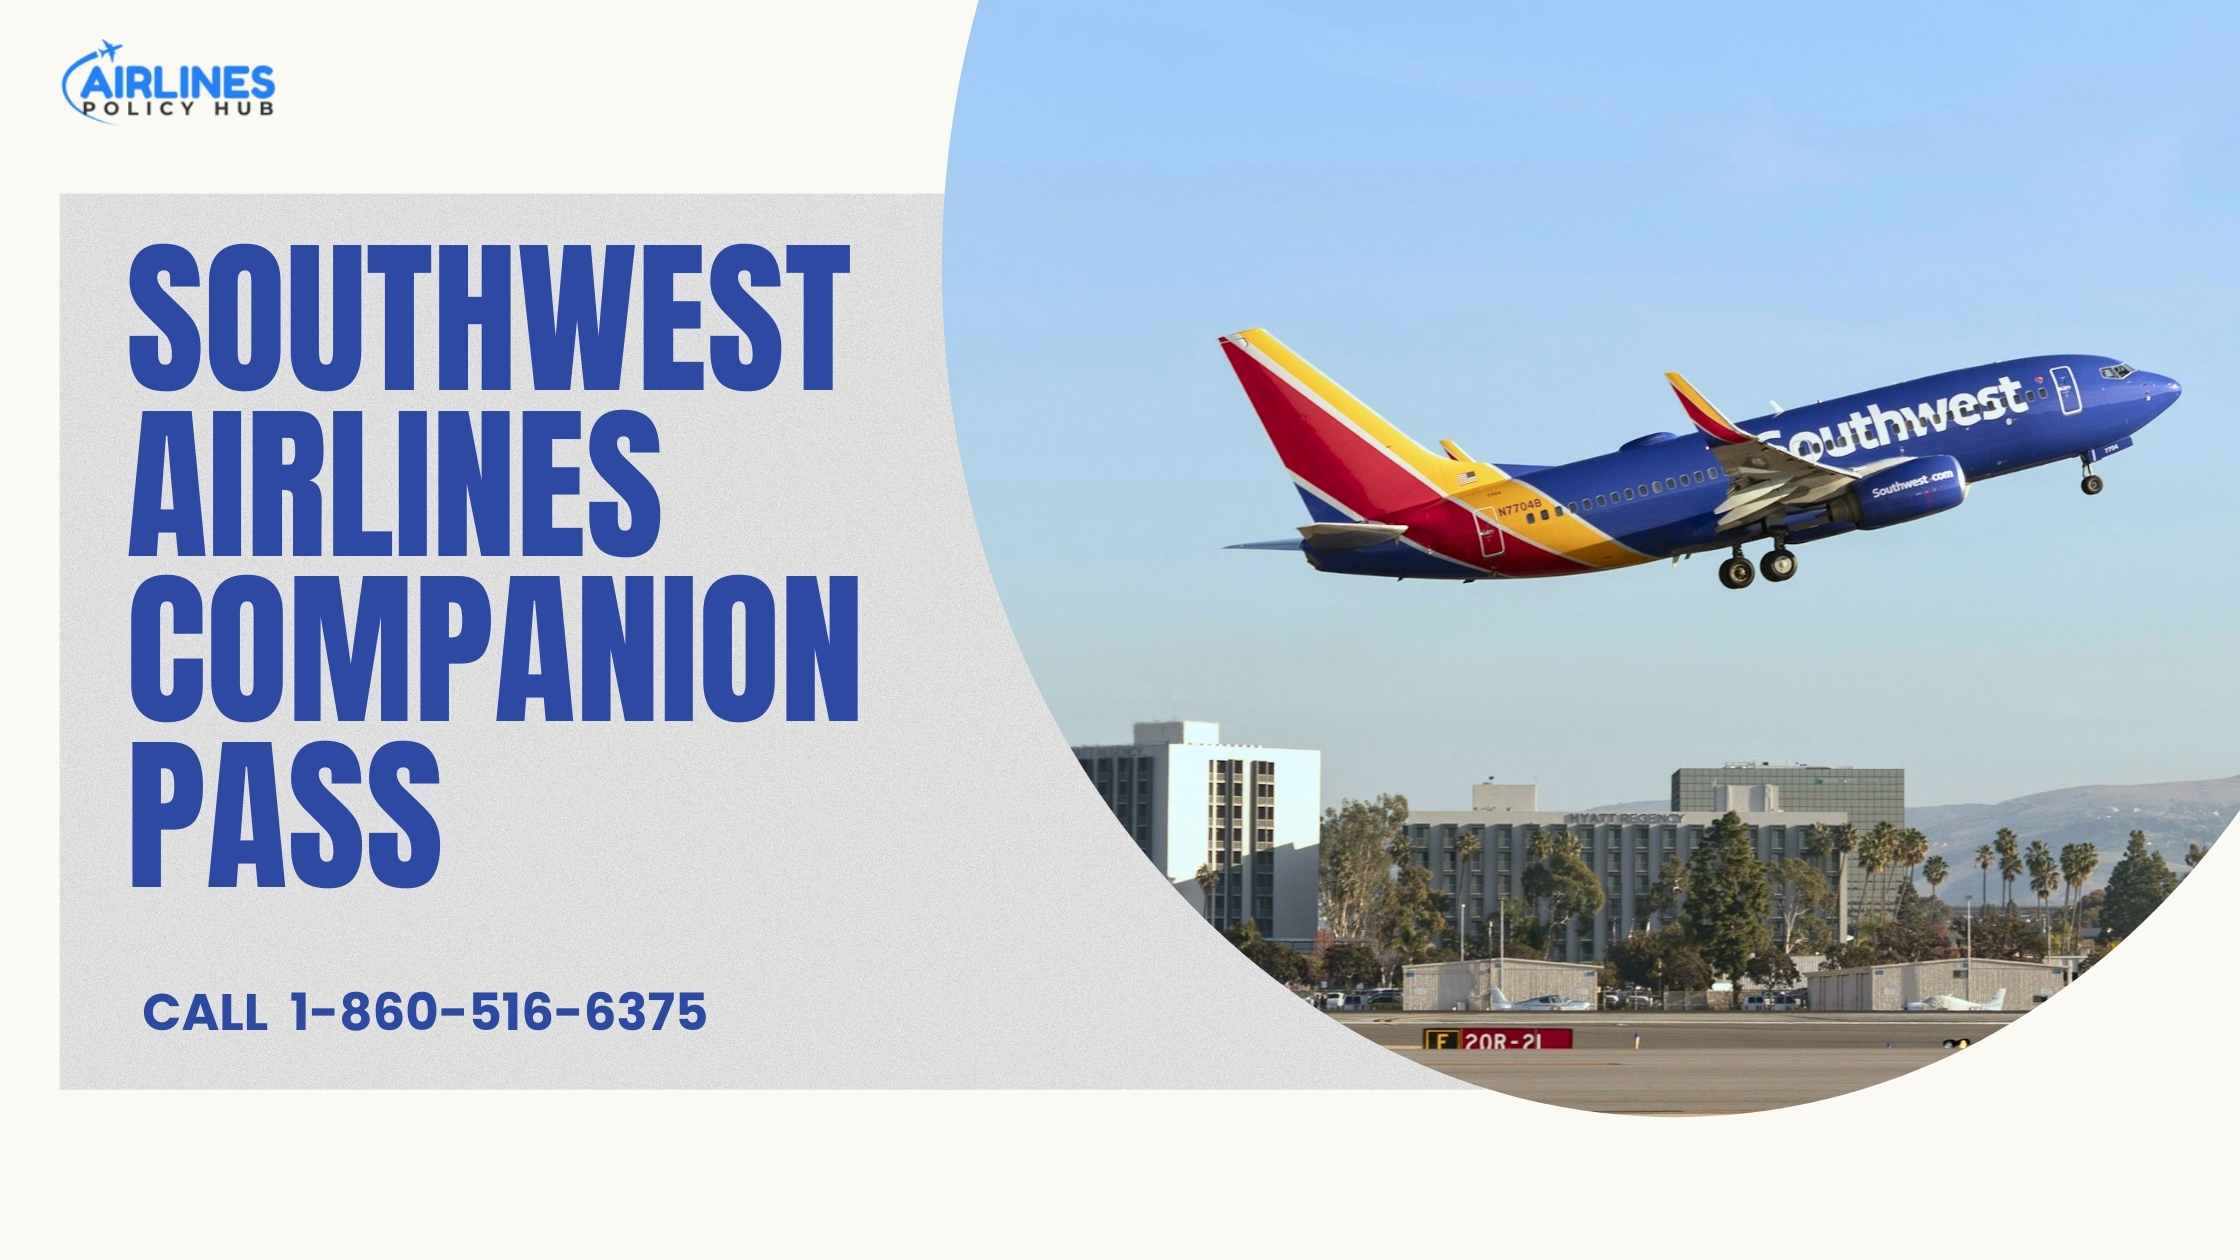 Southwest Airlines Companion Pass